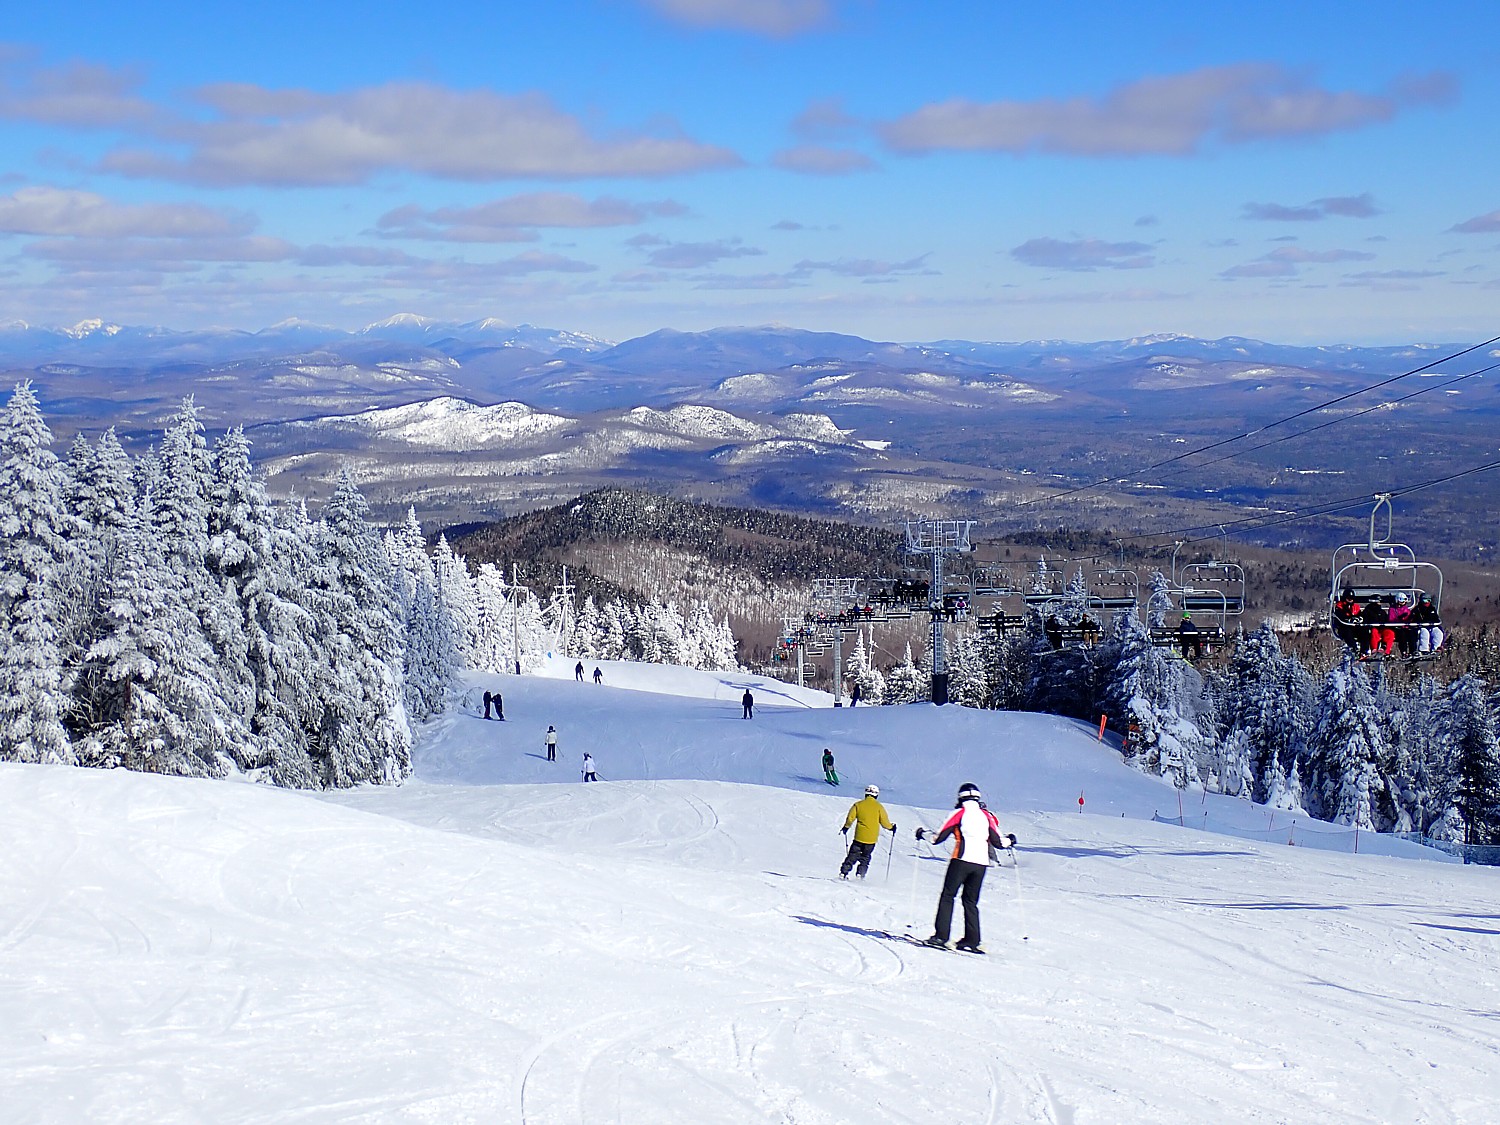 Good snow, great amenities: Skiing in luxury at Colorado's Beaver Creek -  The Washington Post